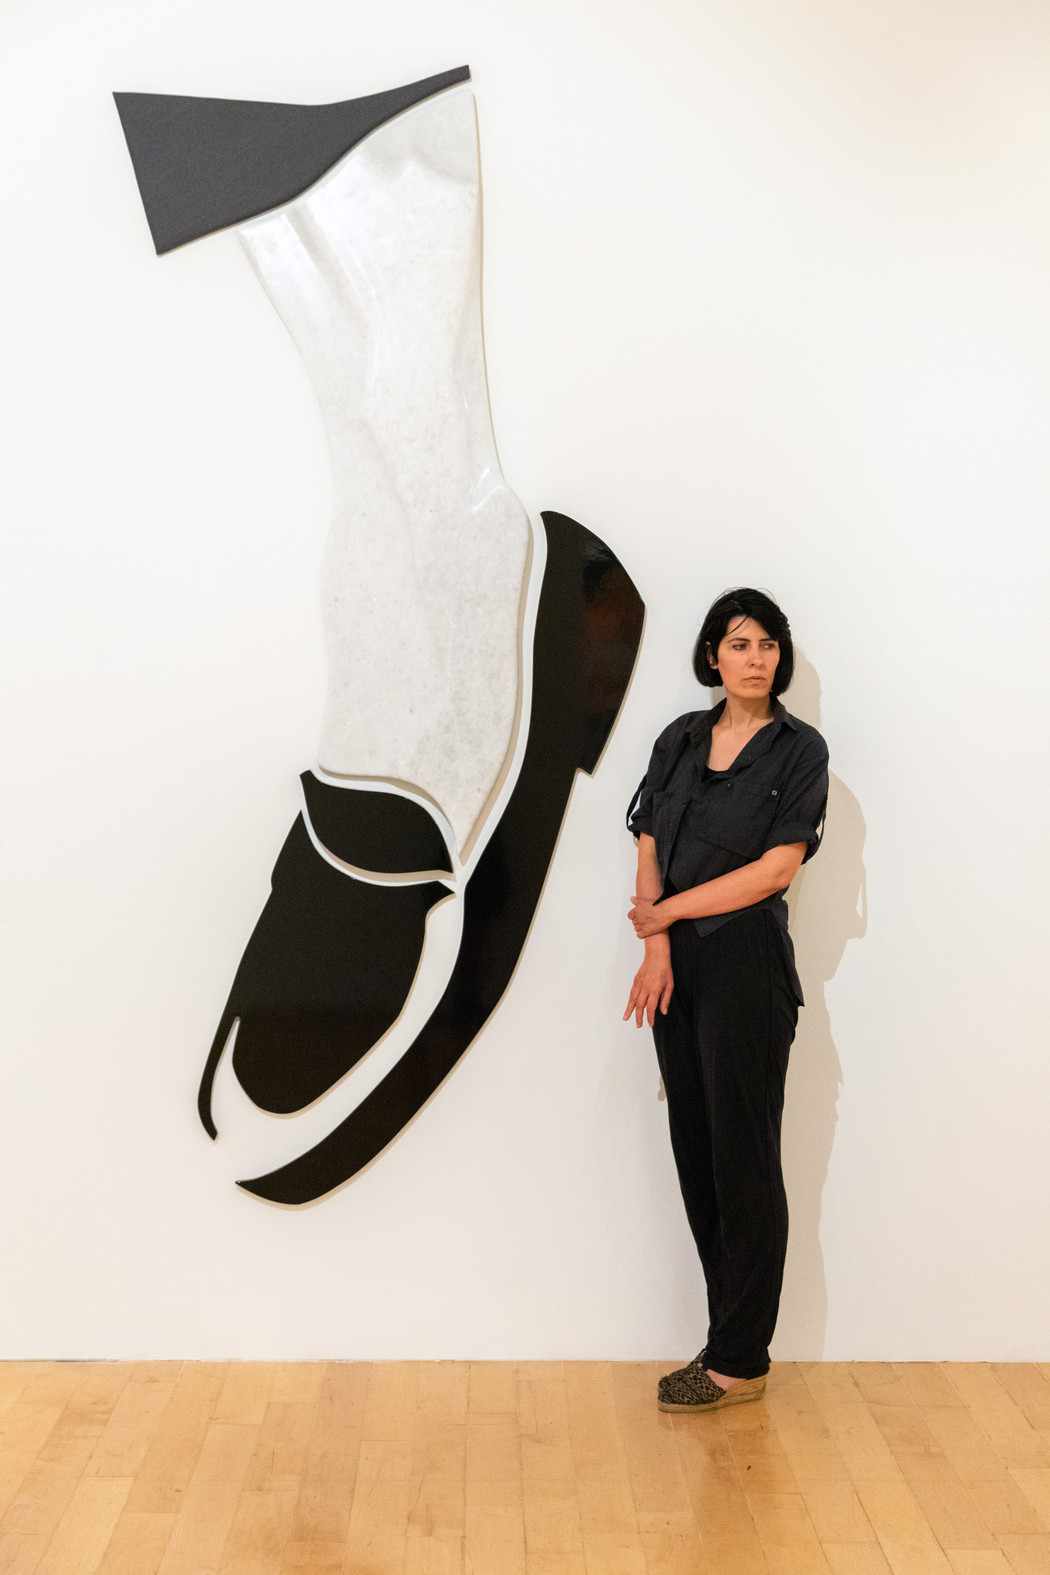 Rallou panagiotou with her work no more black shoe, at the exhibition the same river twice, 2019, benaki museum. portrait by paris tavitian  presse